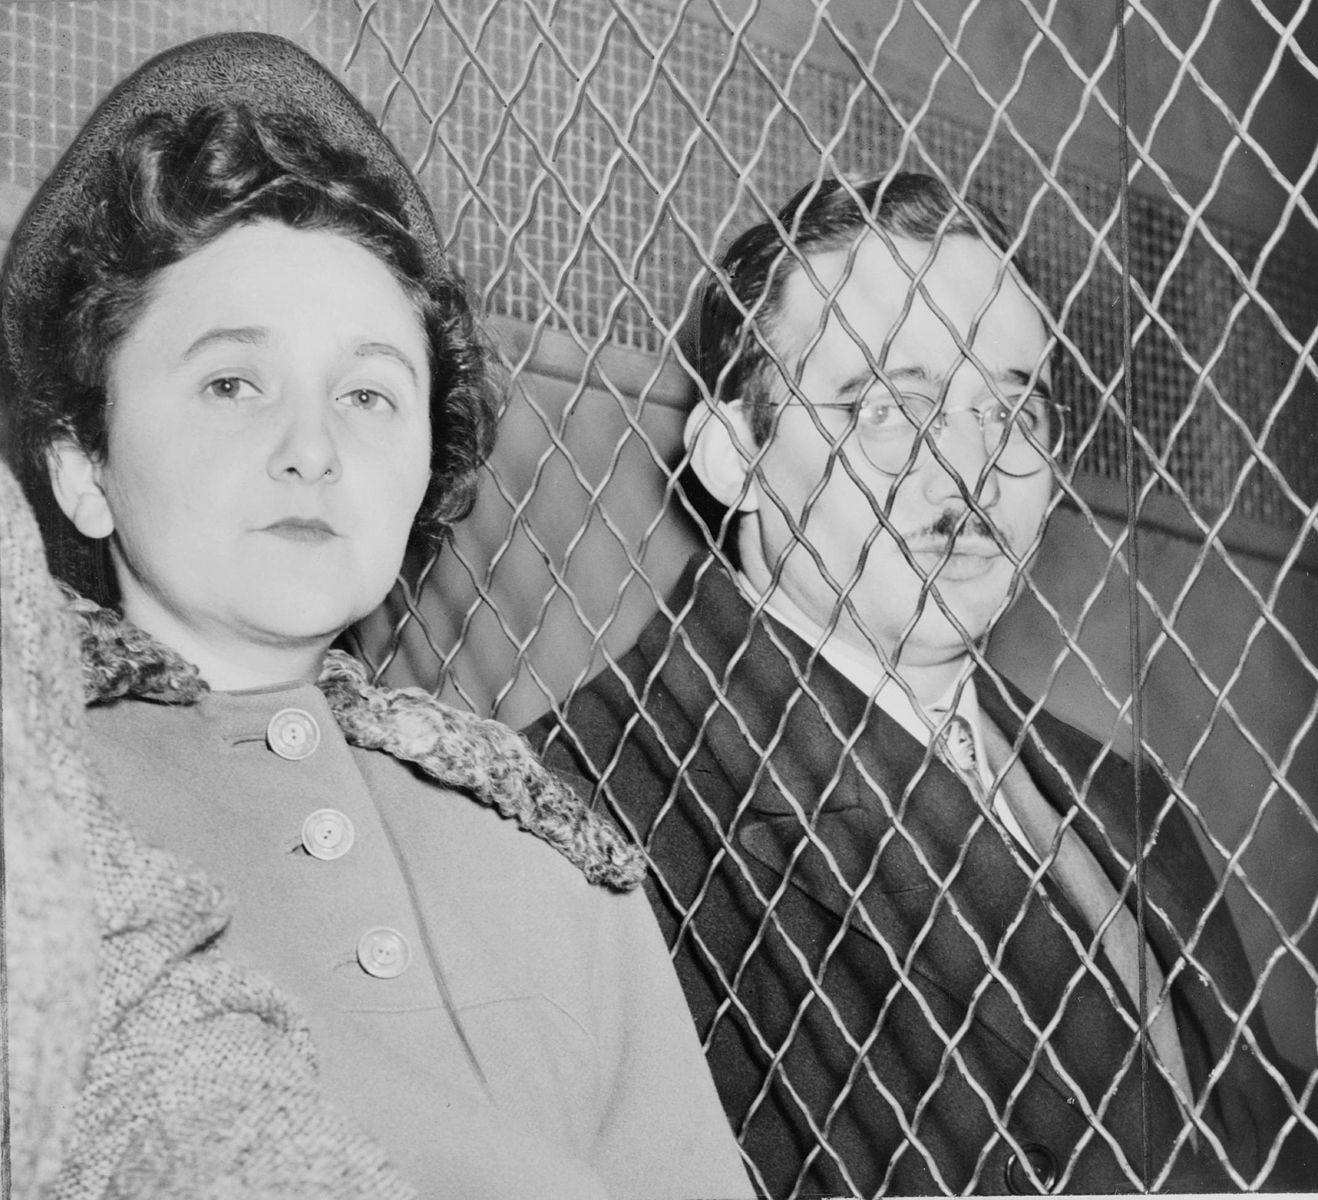 Julius and Ethel Rosenberg